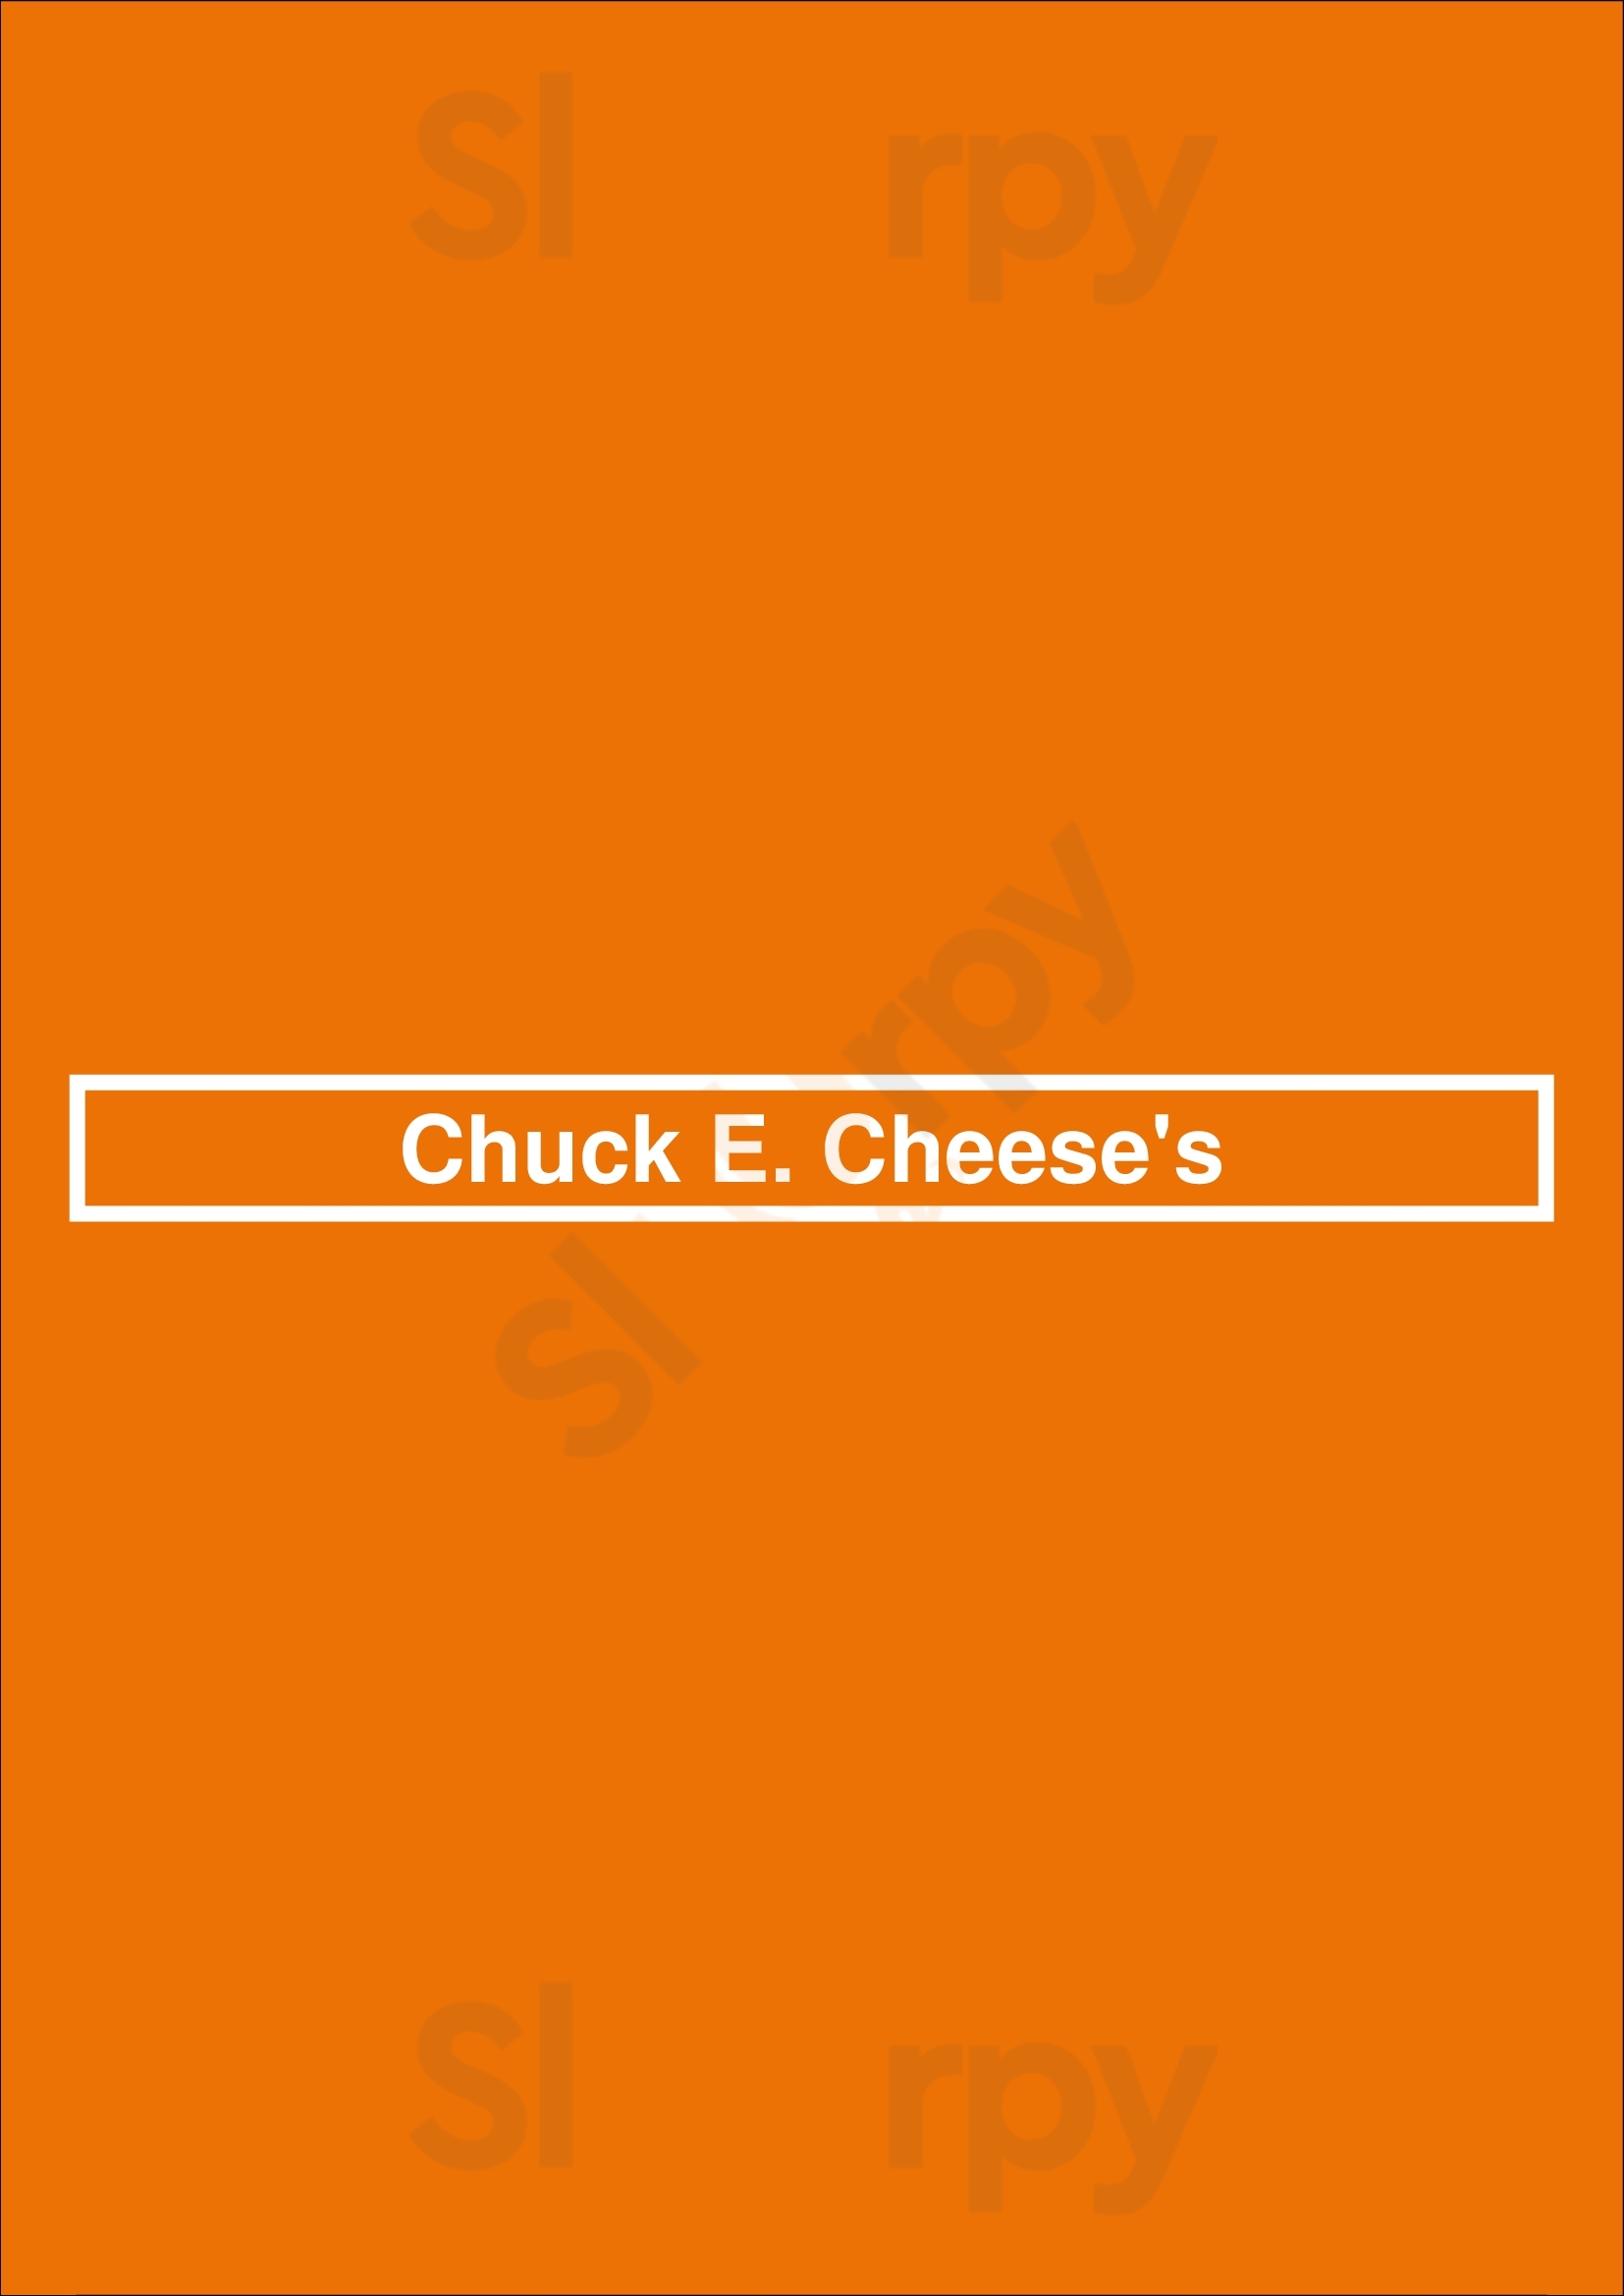 Chuck E. Cheese's Los Angeles Menu - 1